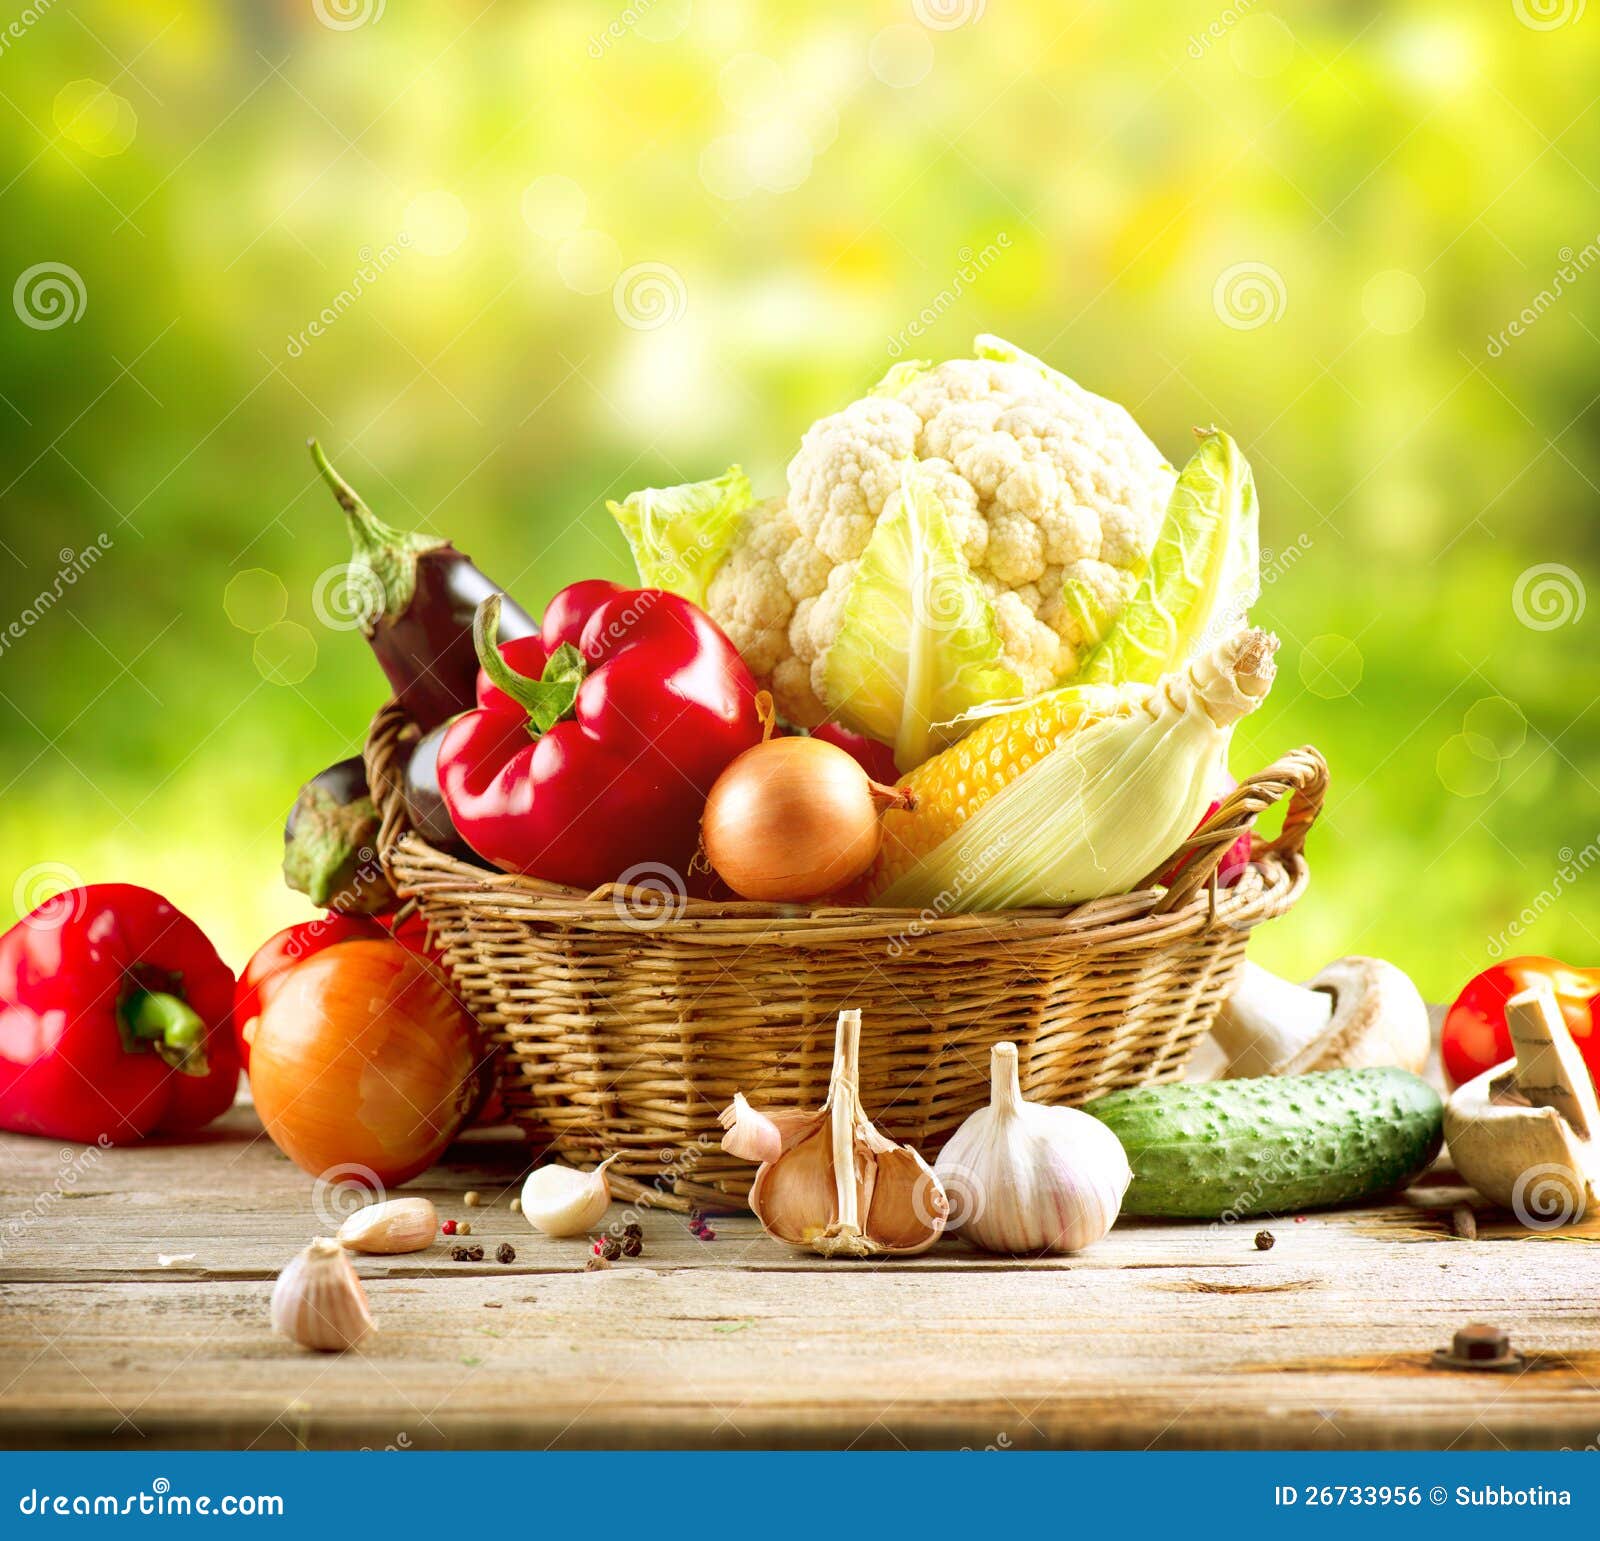 healthy organic vegetables